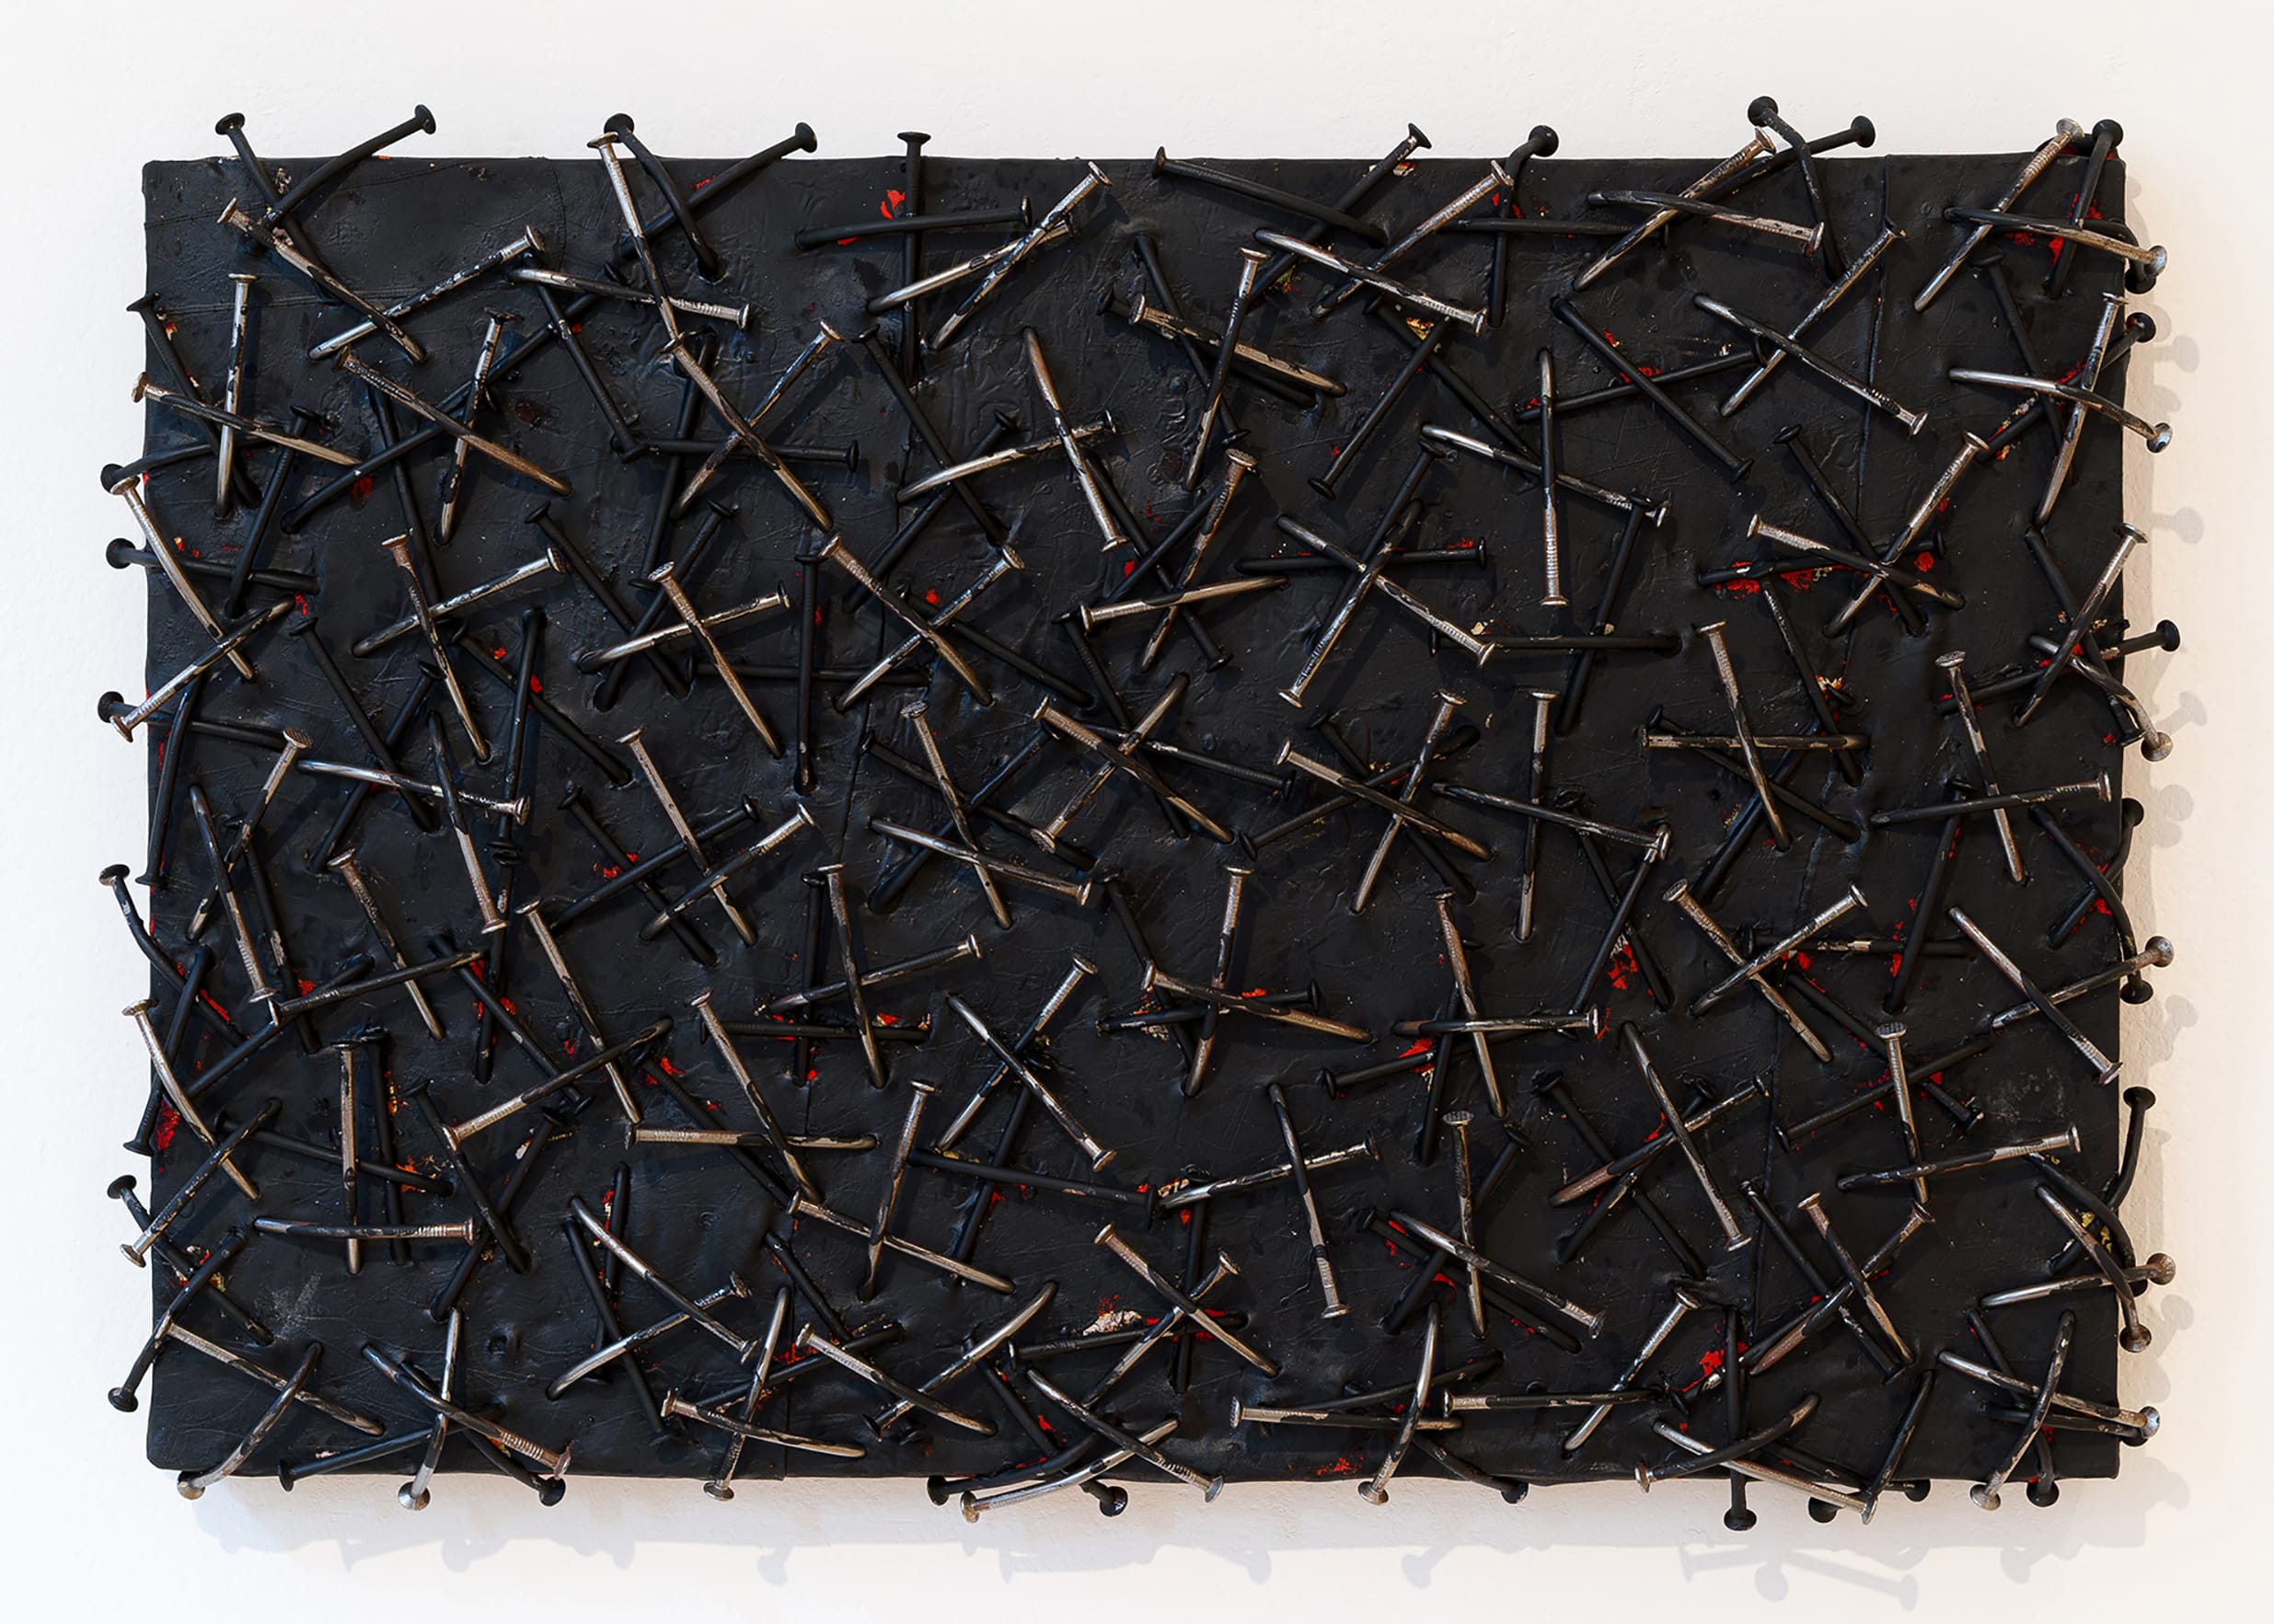 Günther Uecker Verborgen II, 2007, Mixed Media, Glue, black acrylic paint, nails, Kimono fabric on plywood, 44.5 x 63.0 x 7.0 (cm), 17.5 x 24.8 x 2.8 (inch) USD 400,001 - 500,000 at The Ma